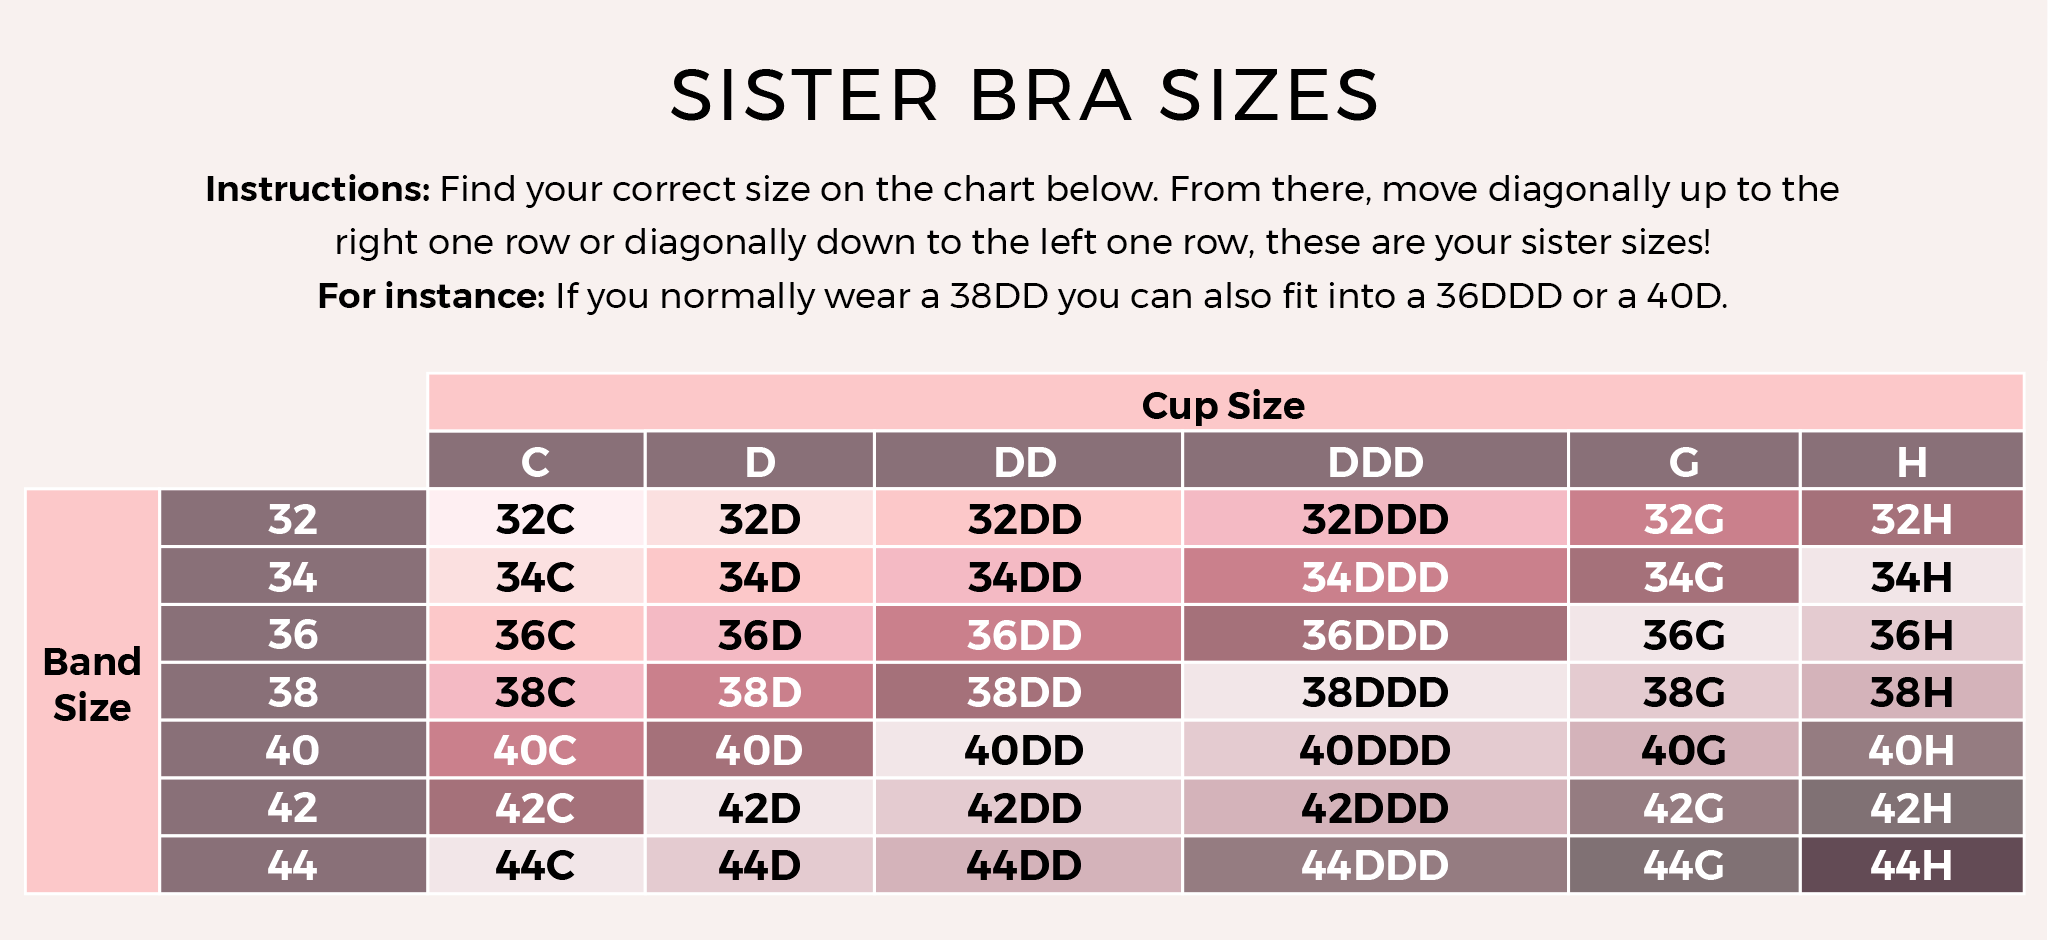 Bra Size Sister Sizes